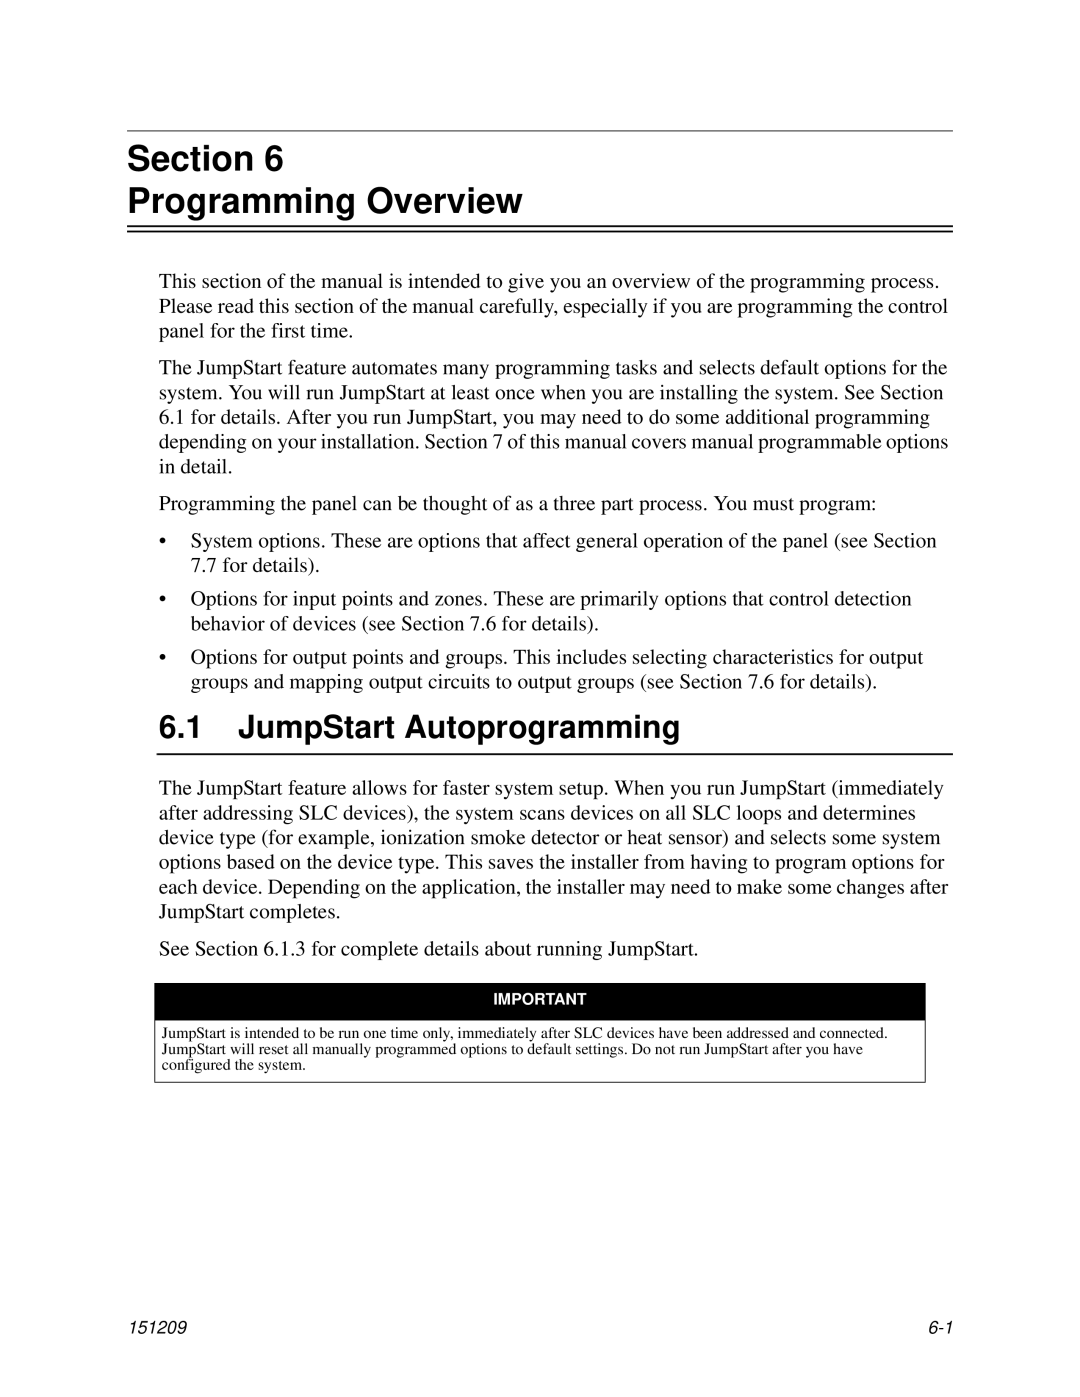 Honeywell 5820XL manual Section Programming Overview, JumpStart Autoprogramming 